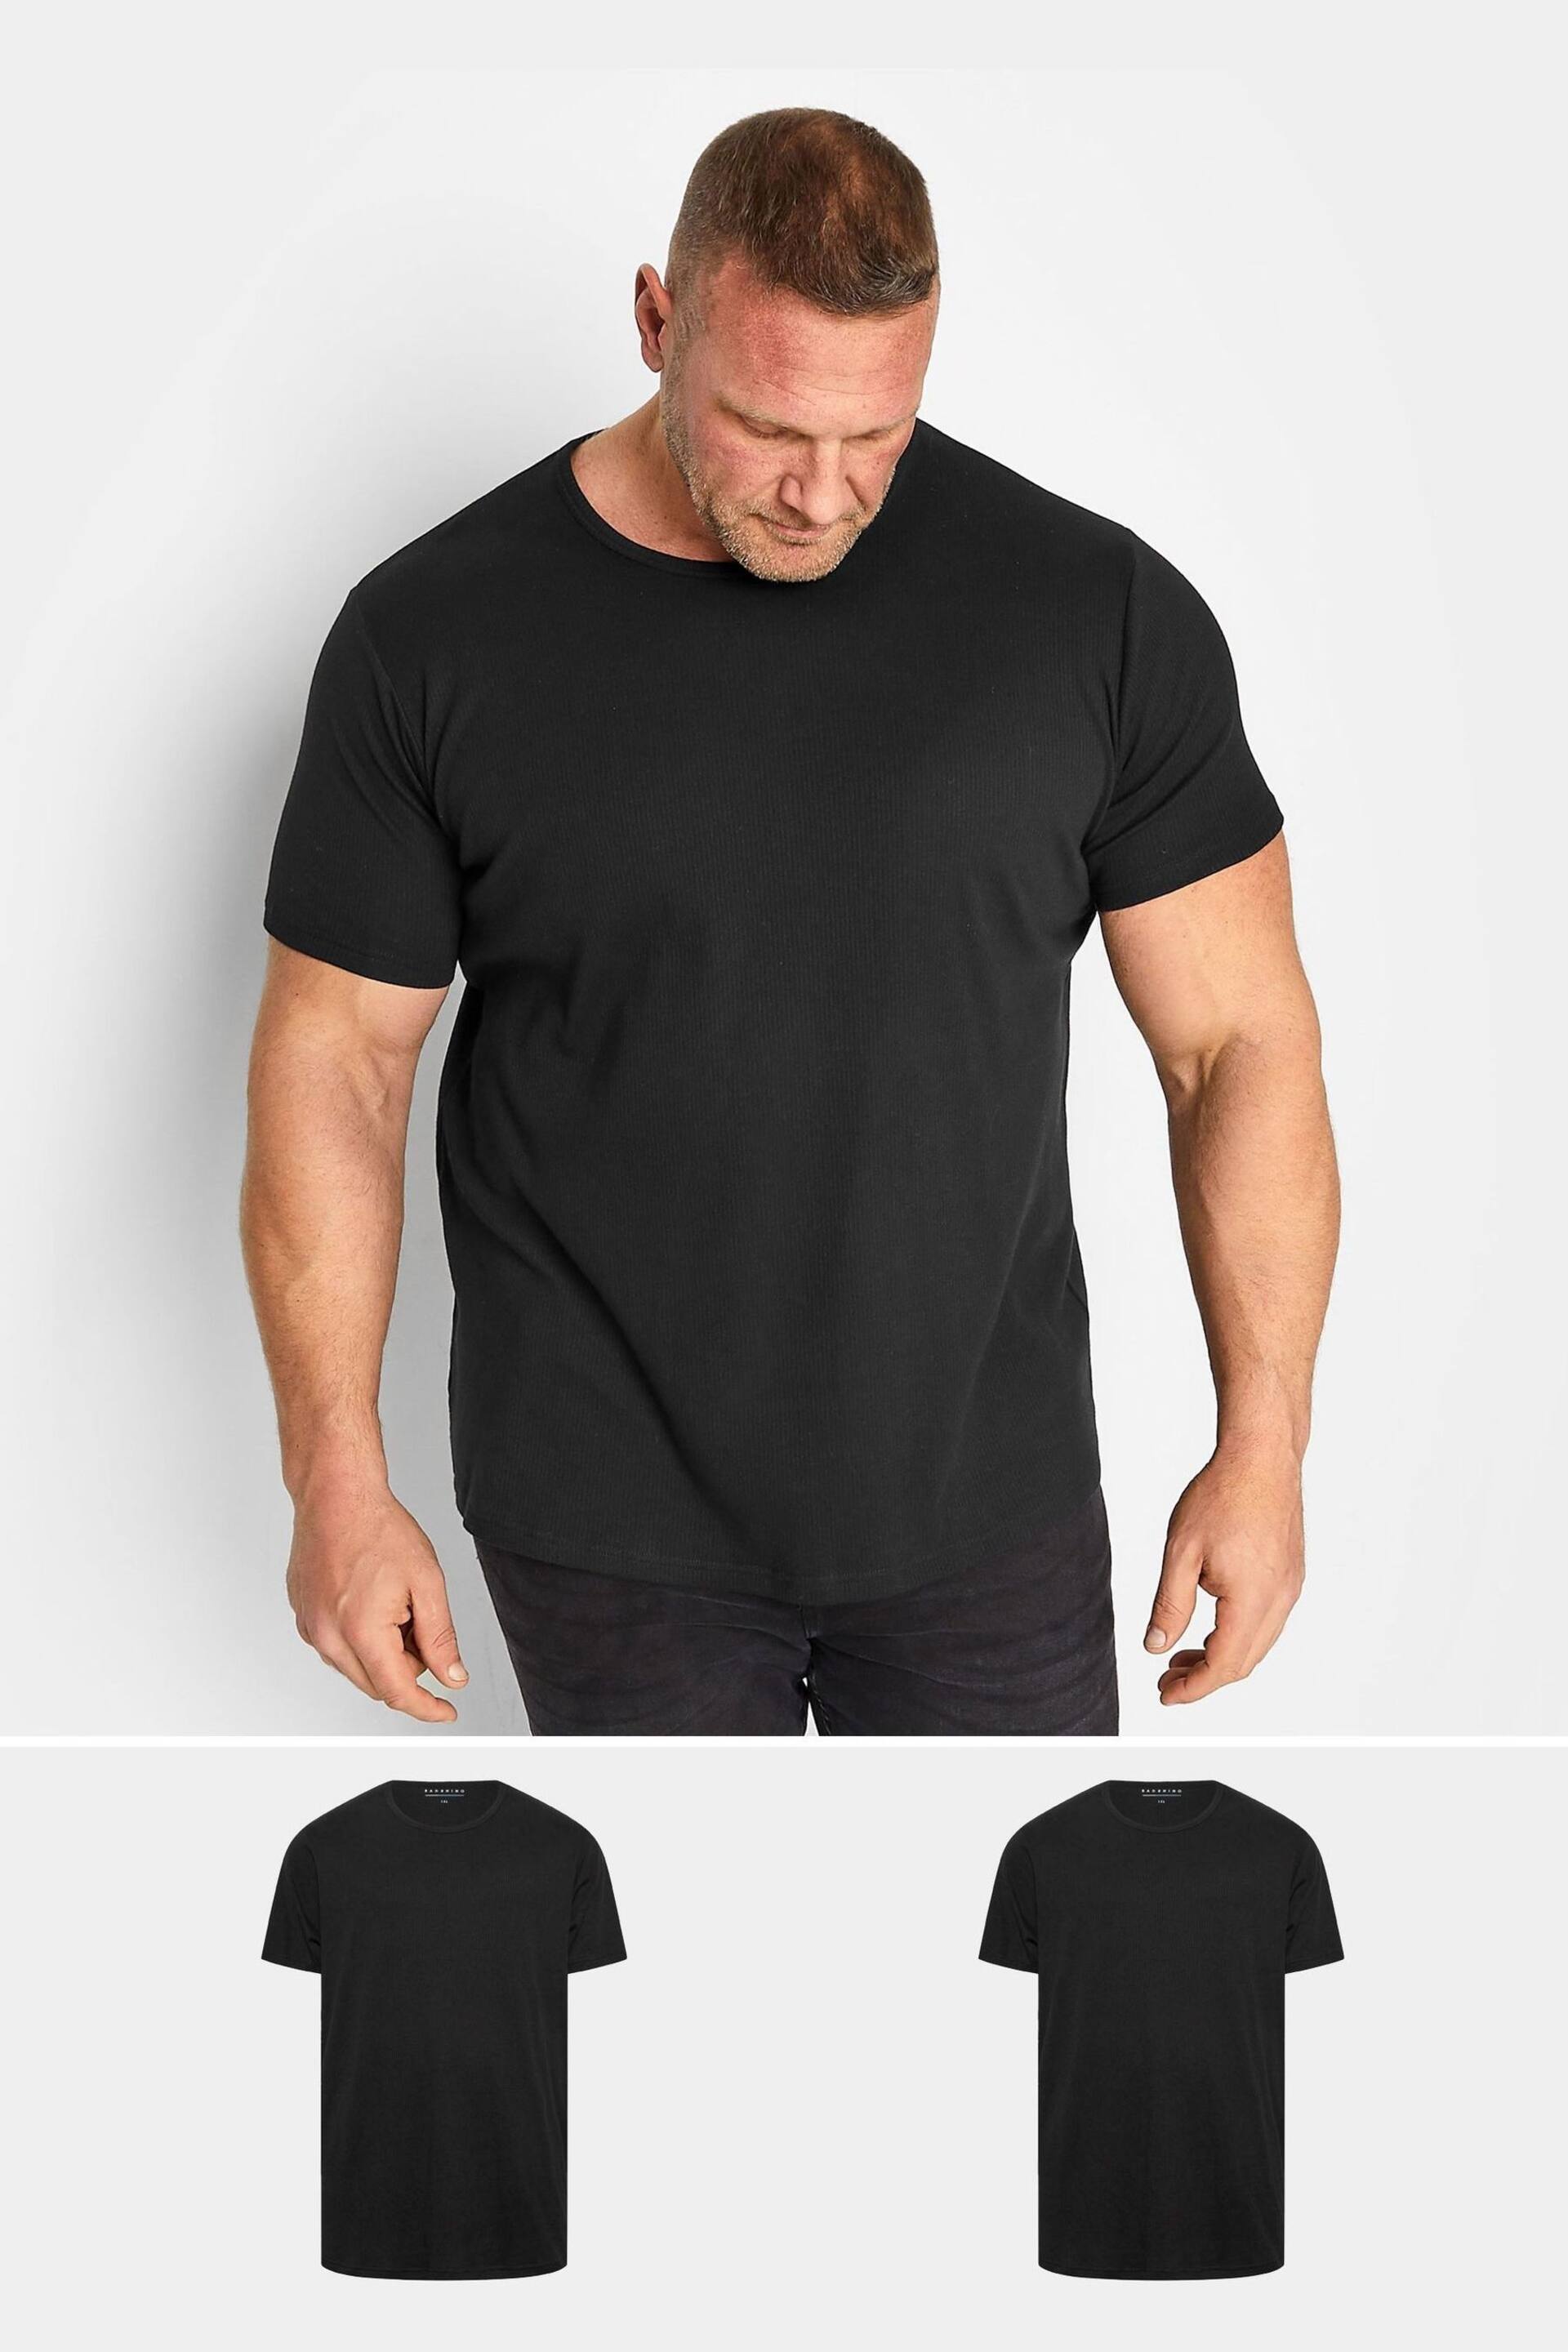 BadRhino Big & Tall Black 2 Pack Thermal T-Shirts - Image 1 of 4